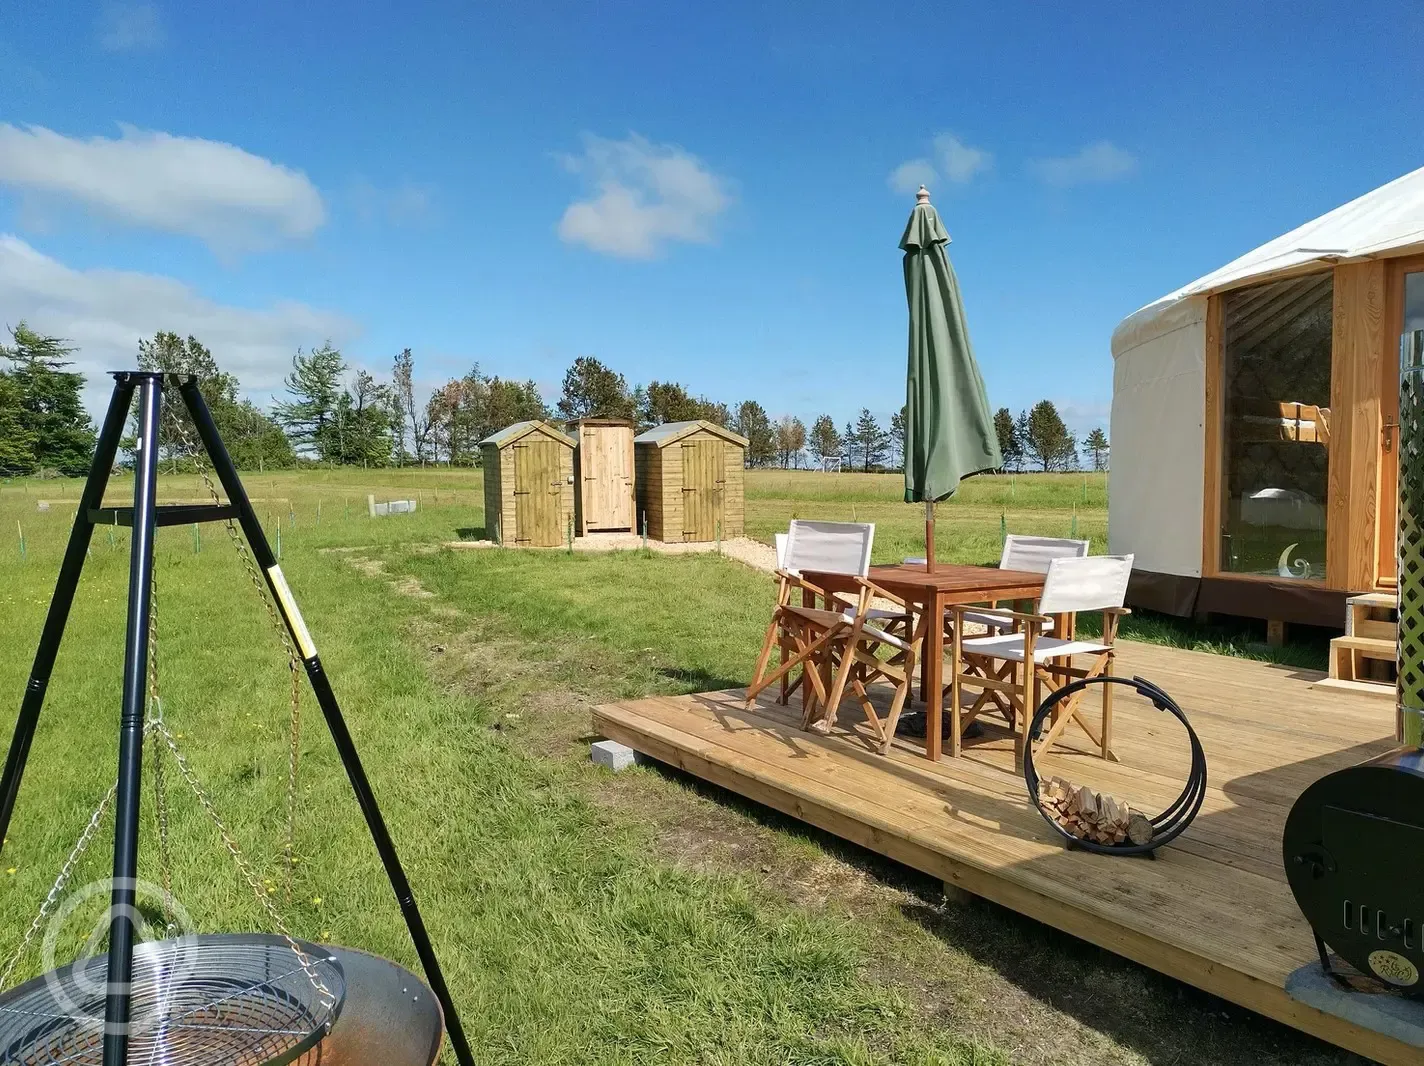 Luxury European yurt decking